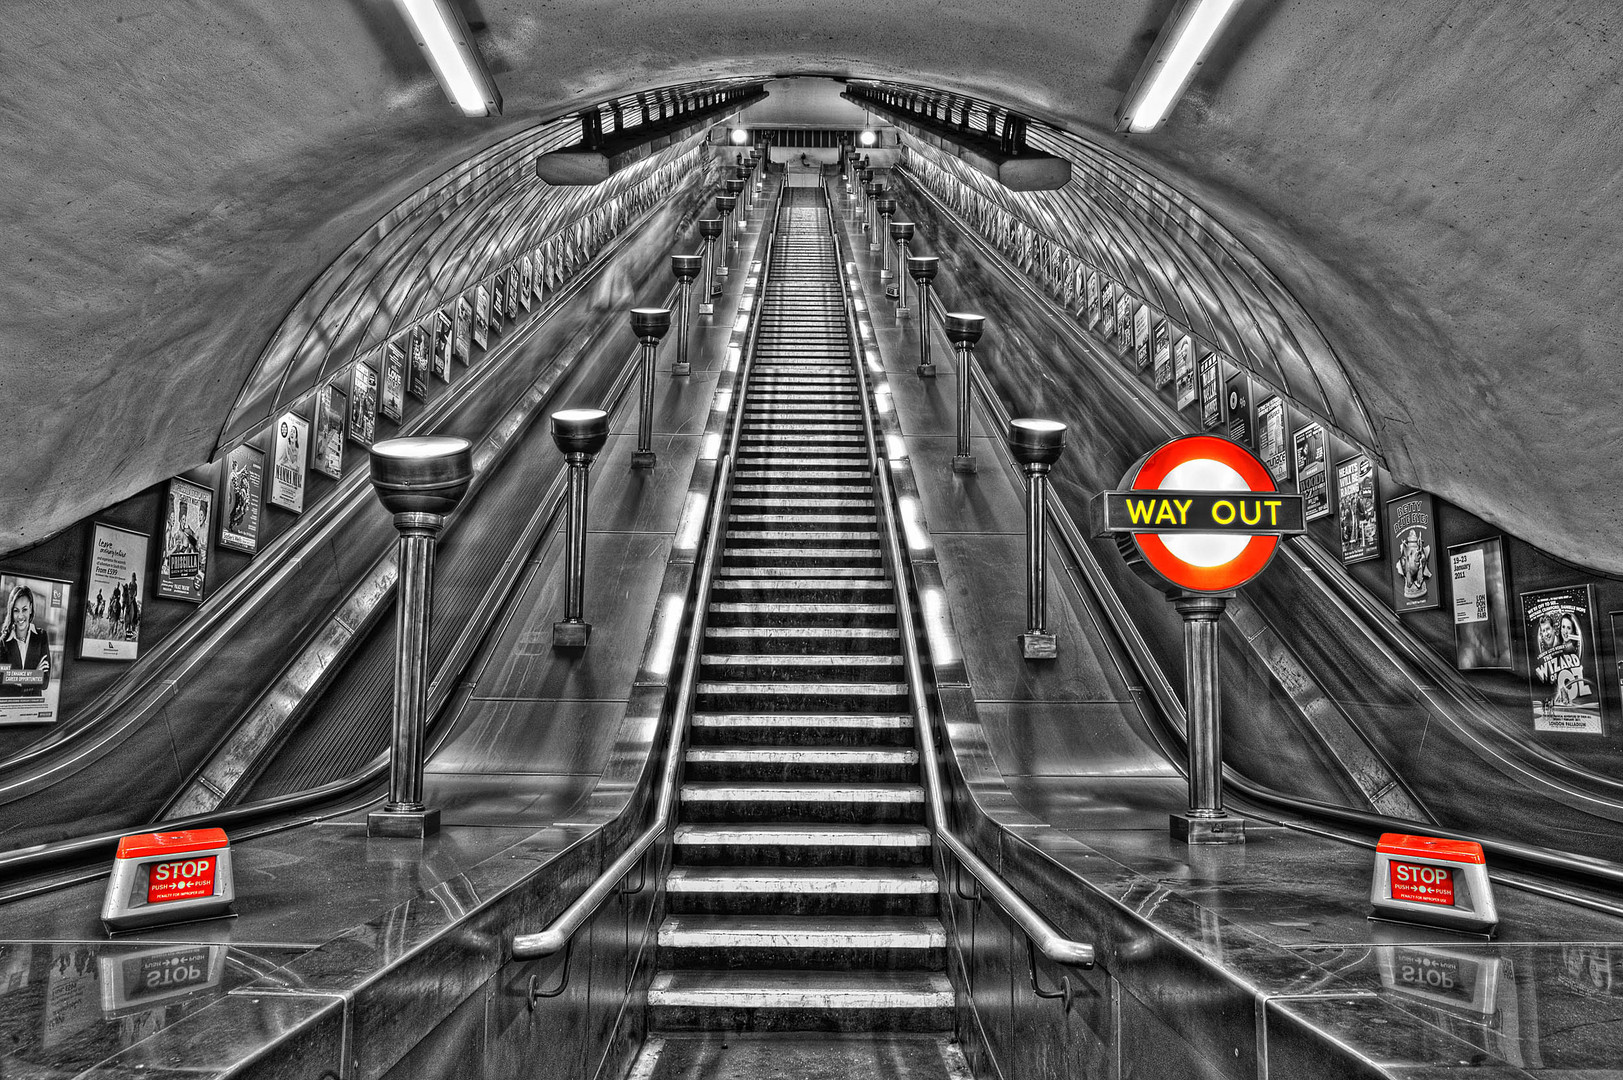 Way out, London Tube, St.-John's Wood, CK